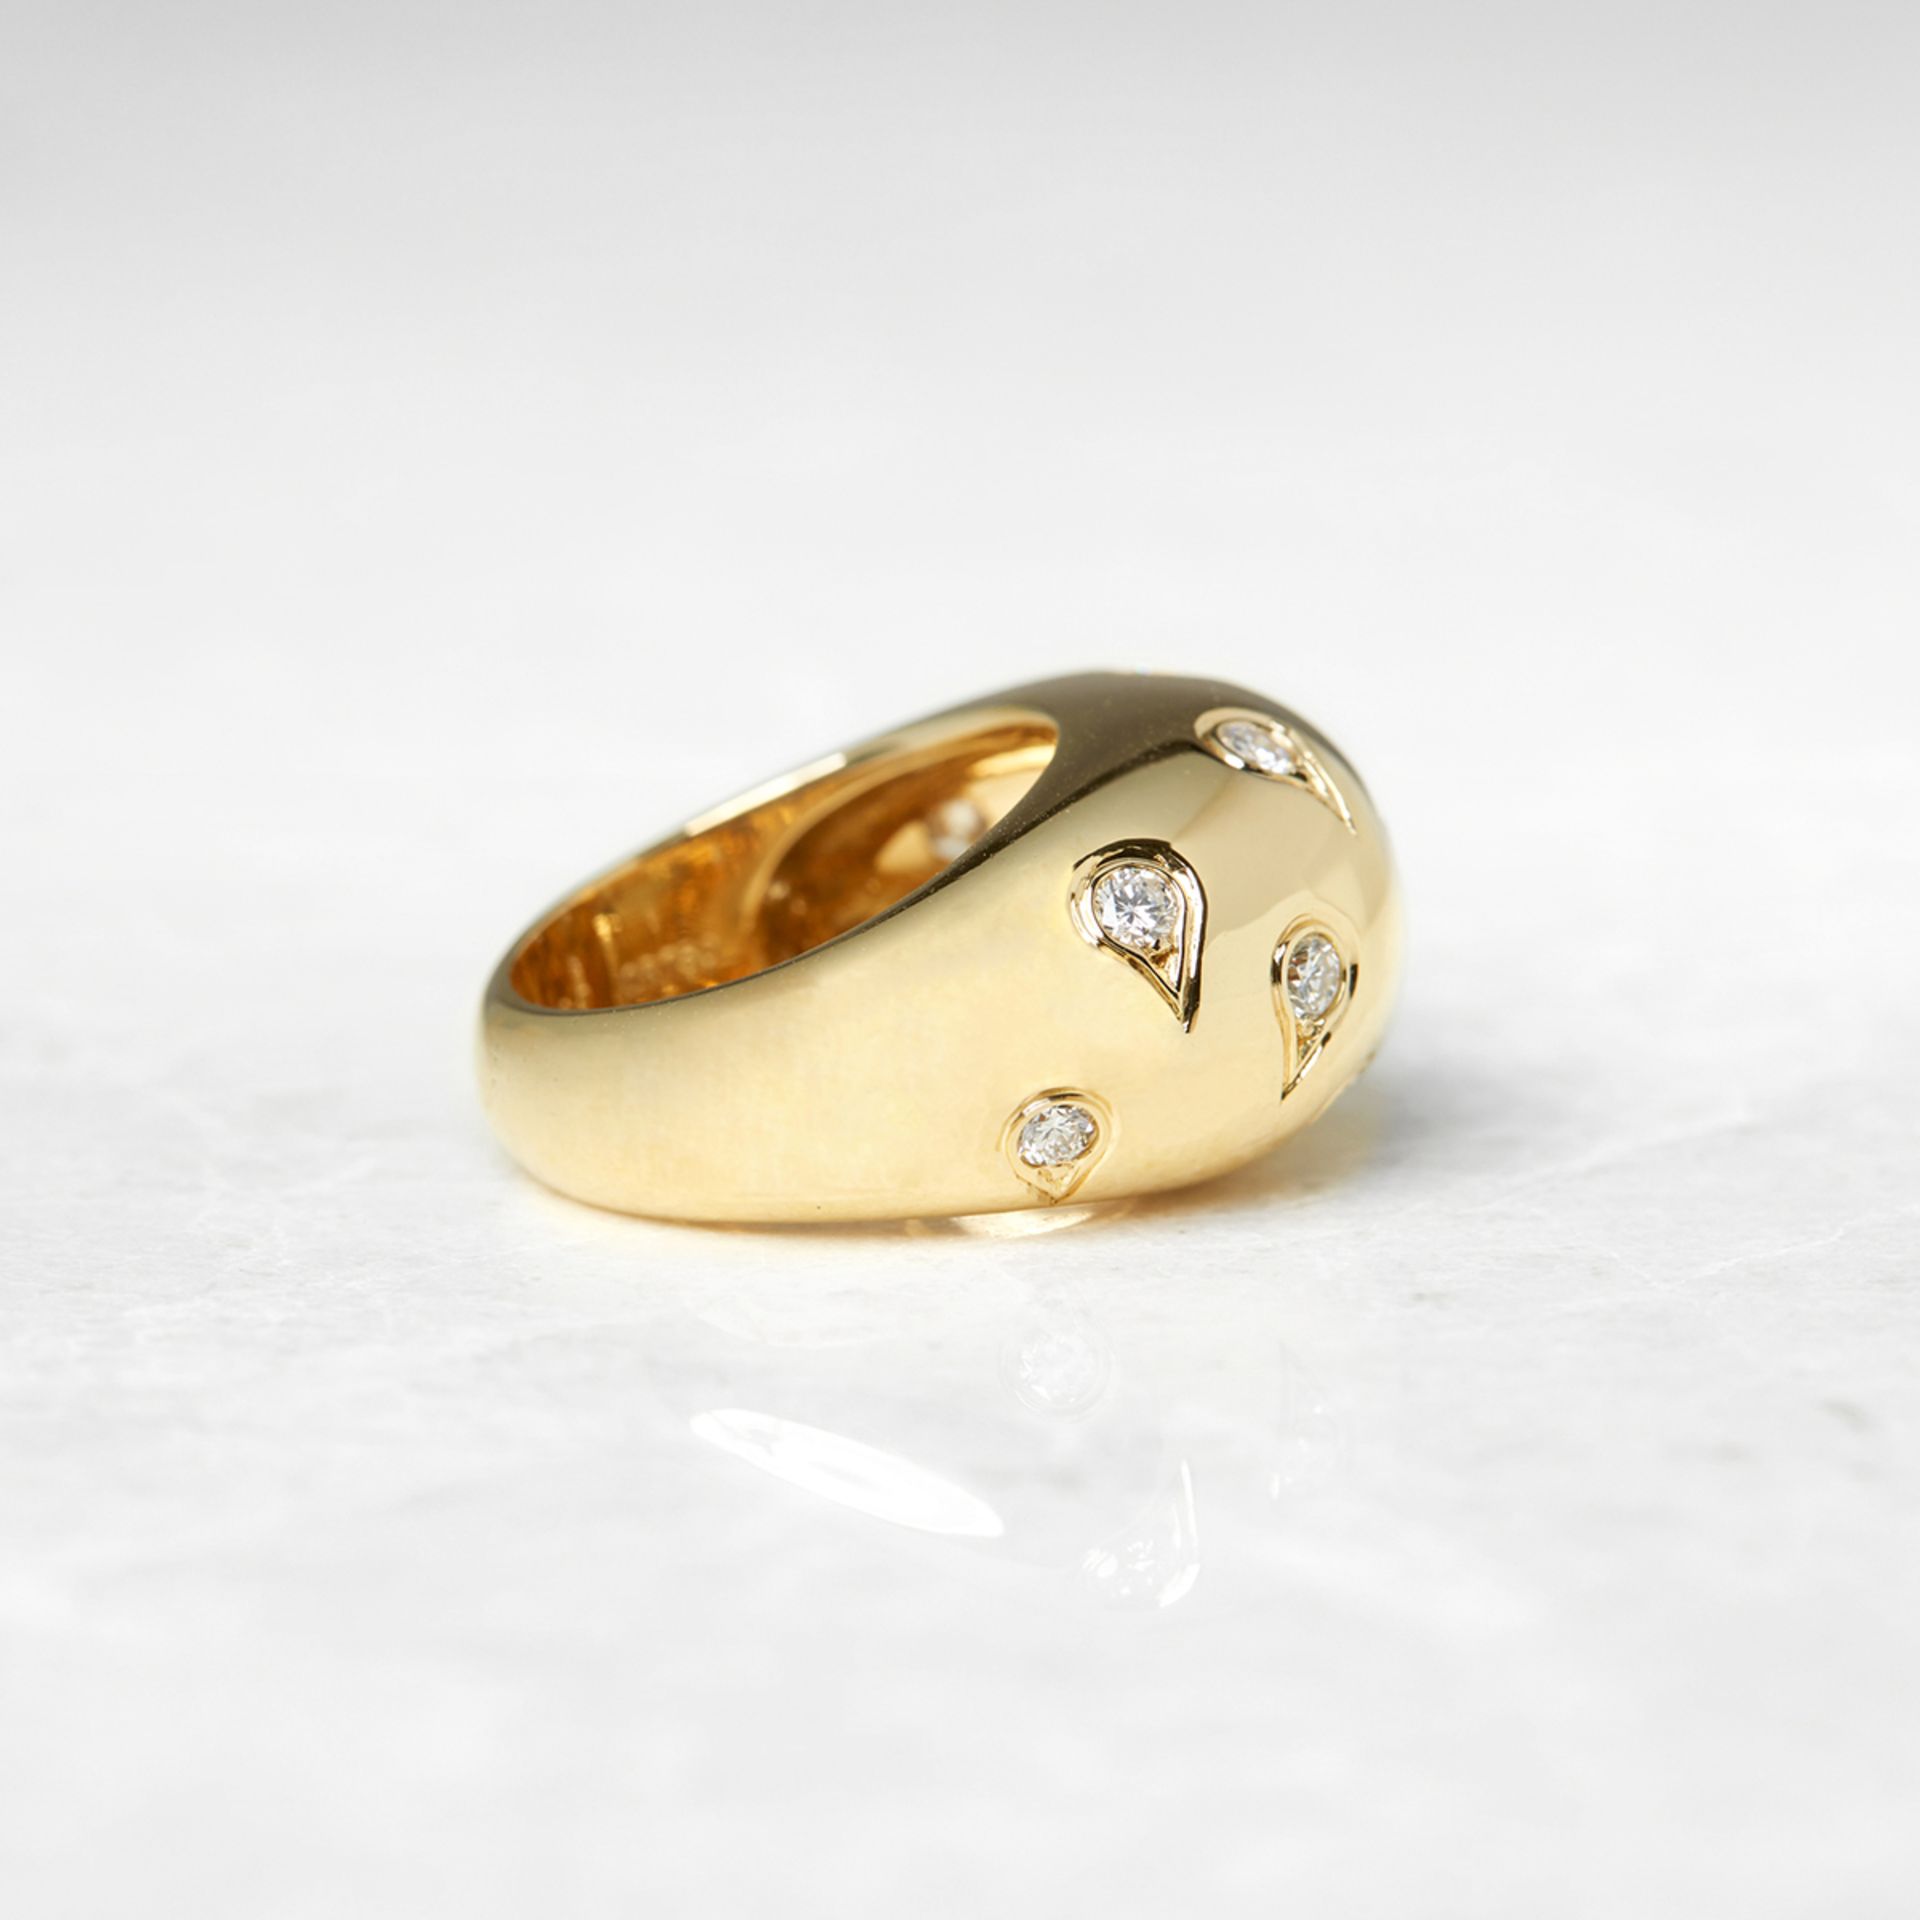 Cartier 18k Yellow Gold 1.00ct Diamond Bombe Ring - Image 4 of 7